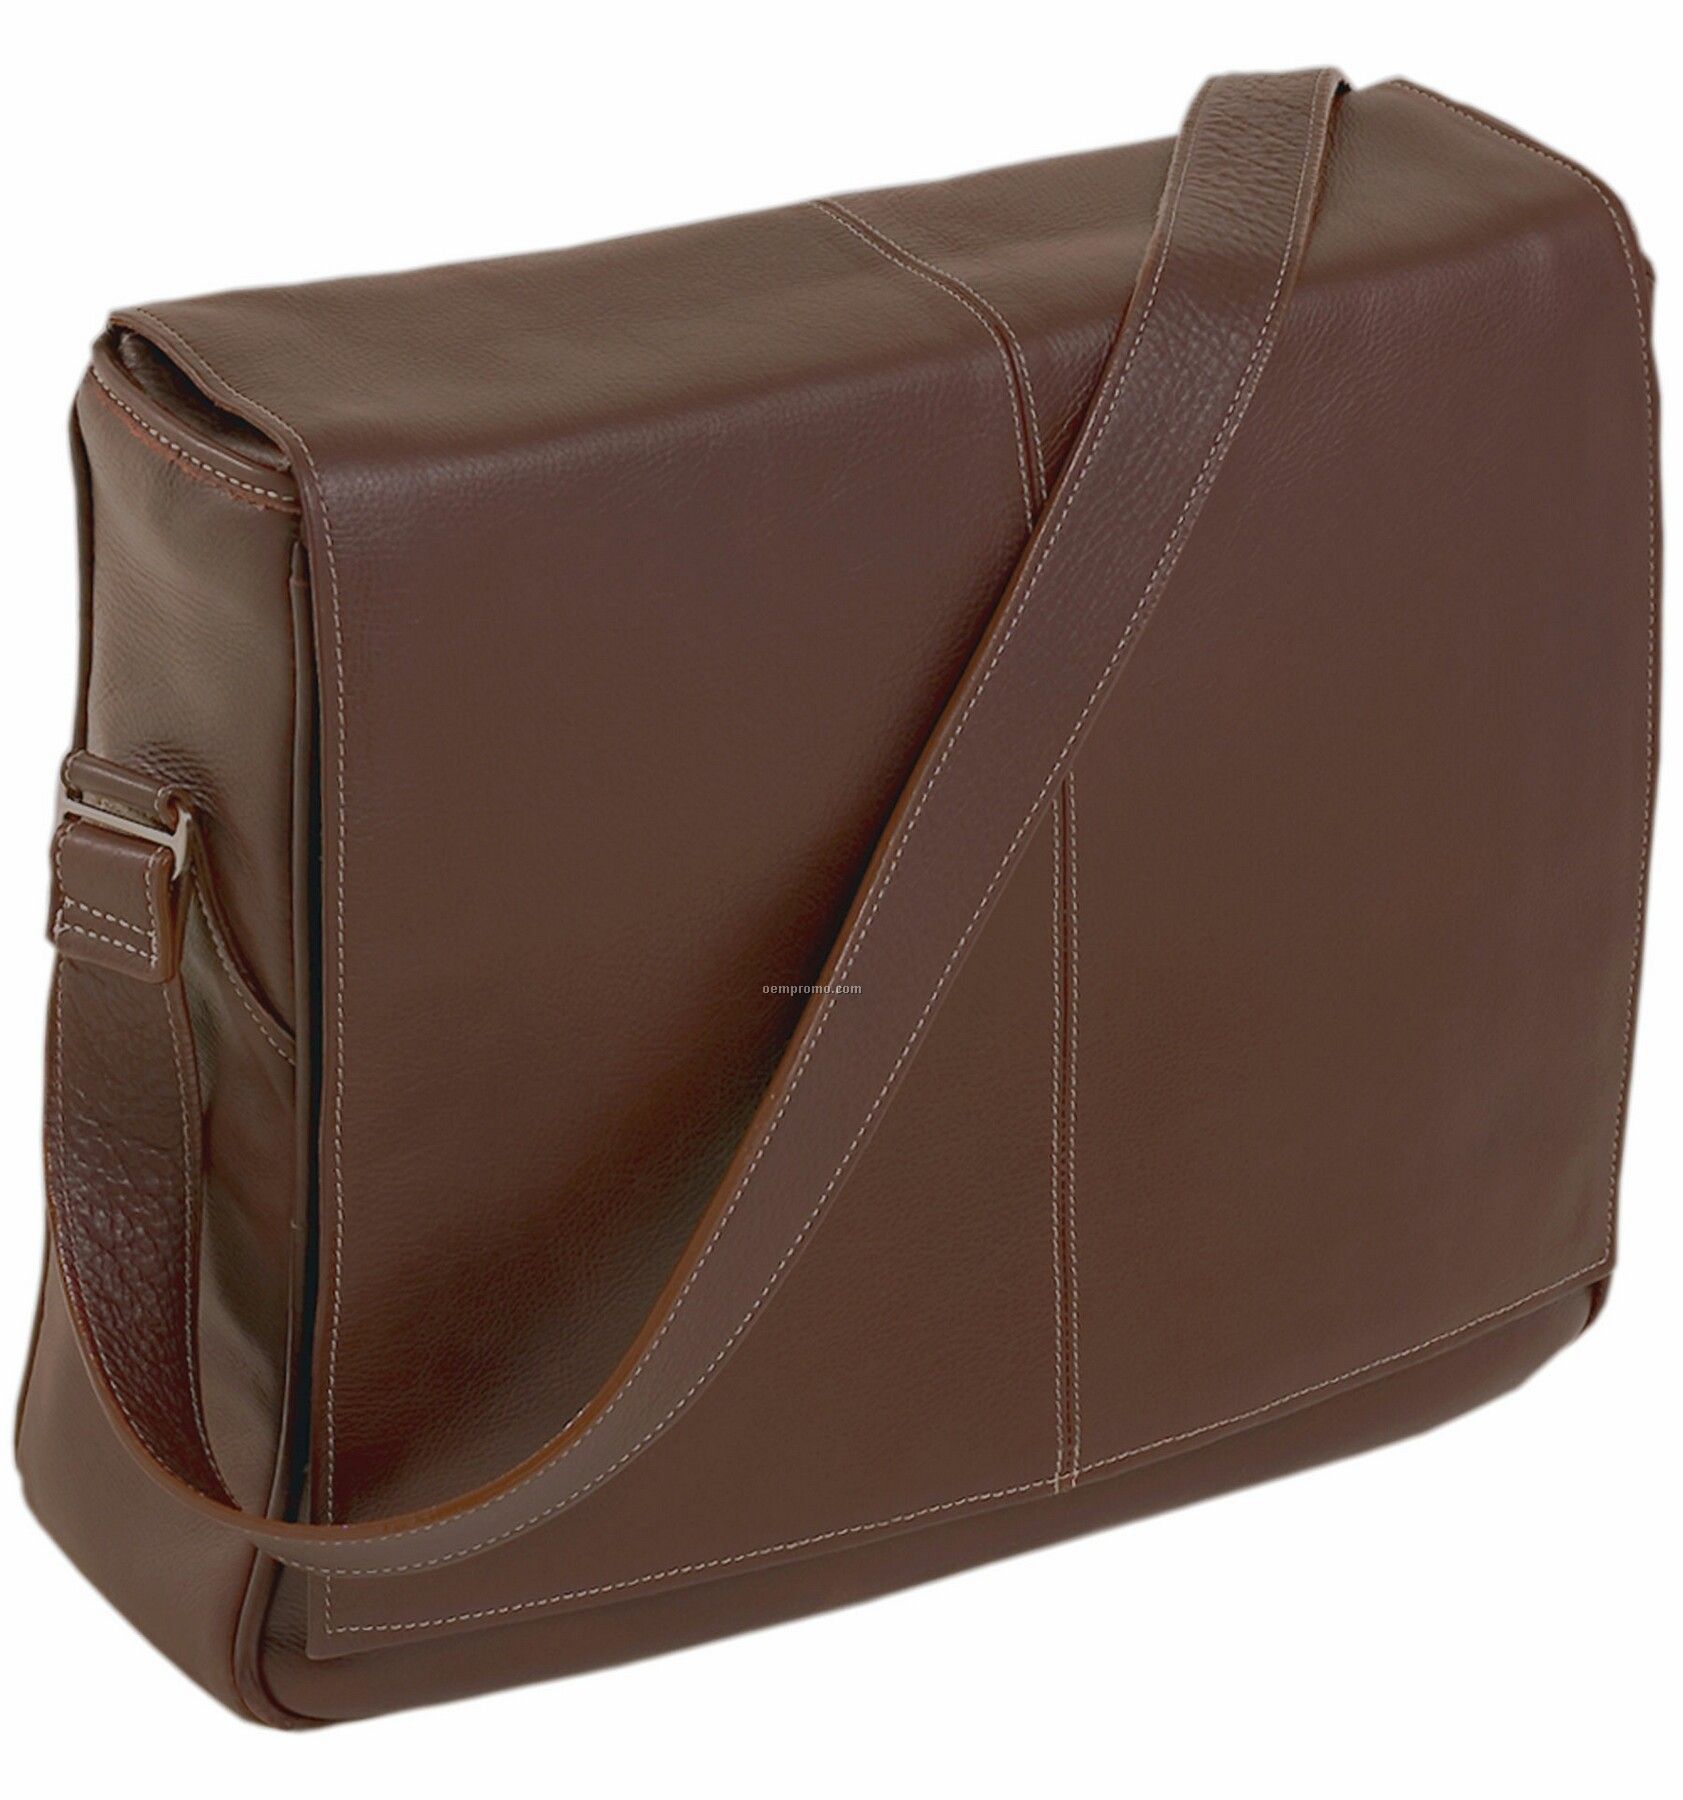 San Francesco Leather Messenger Bag - Cognac Brown